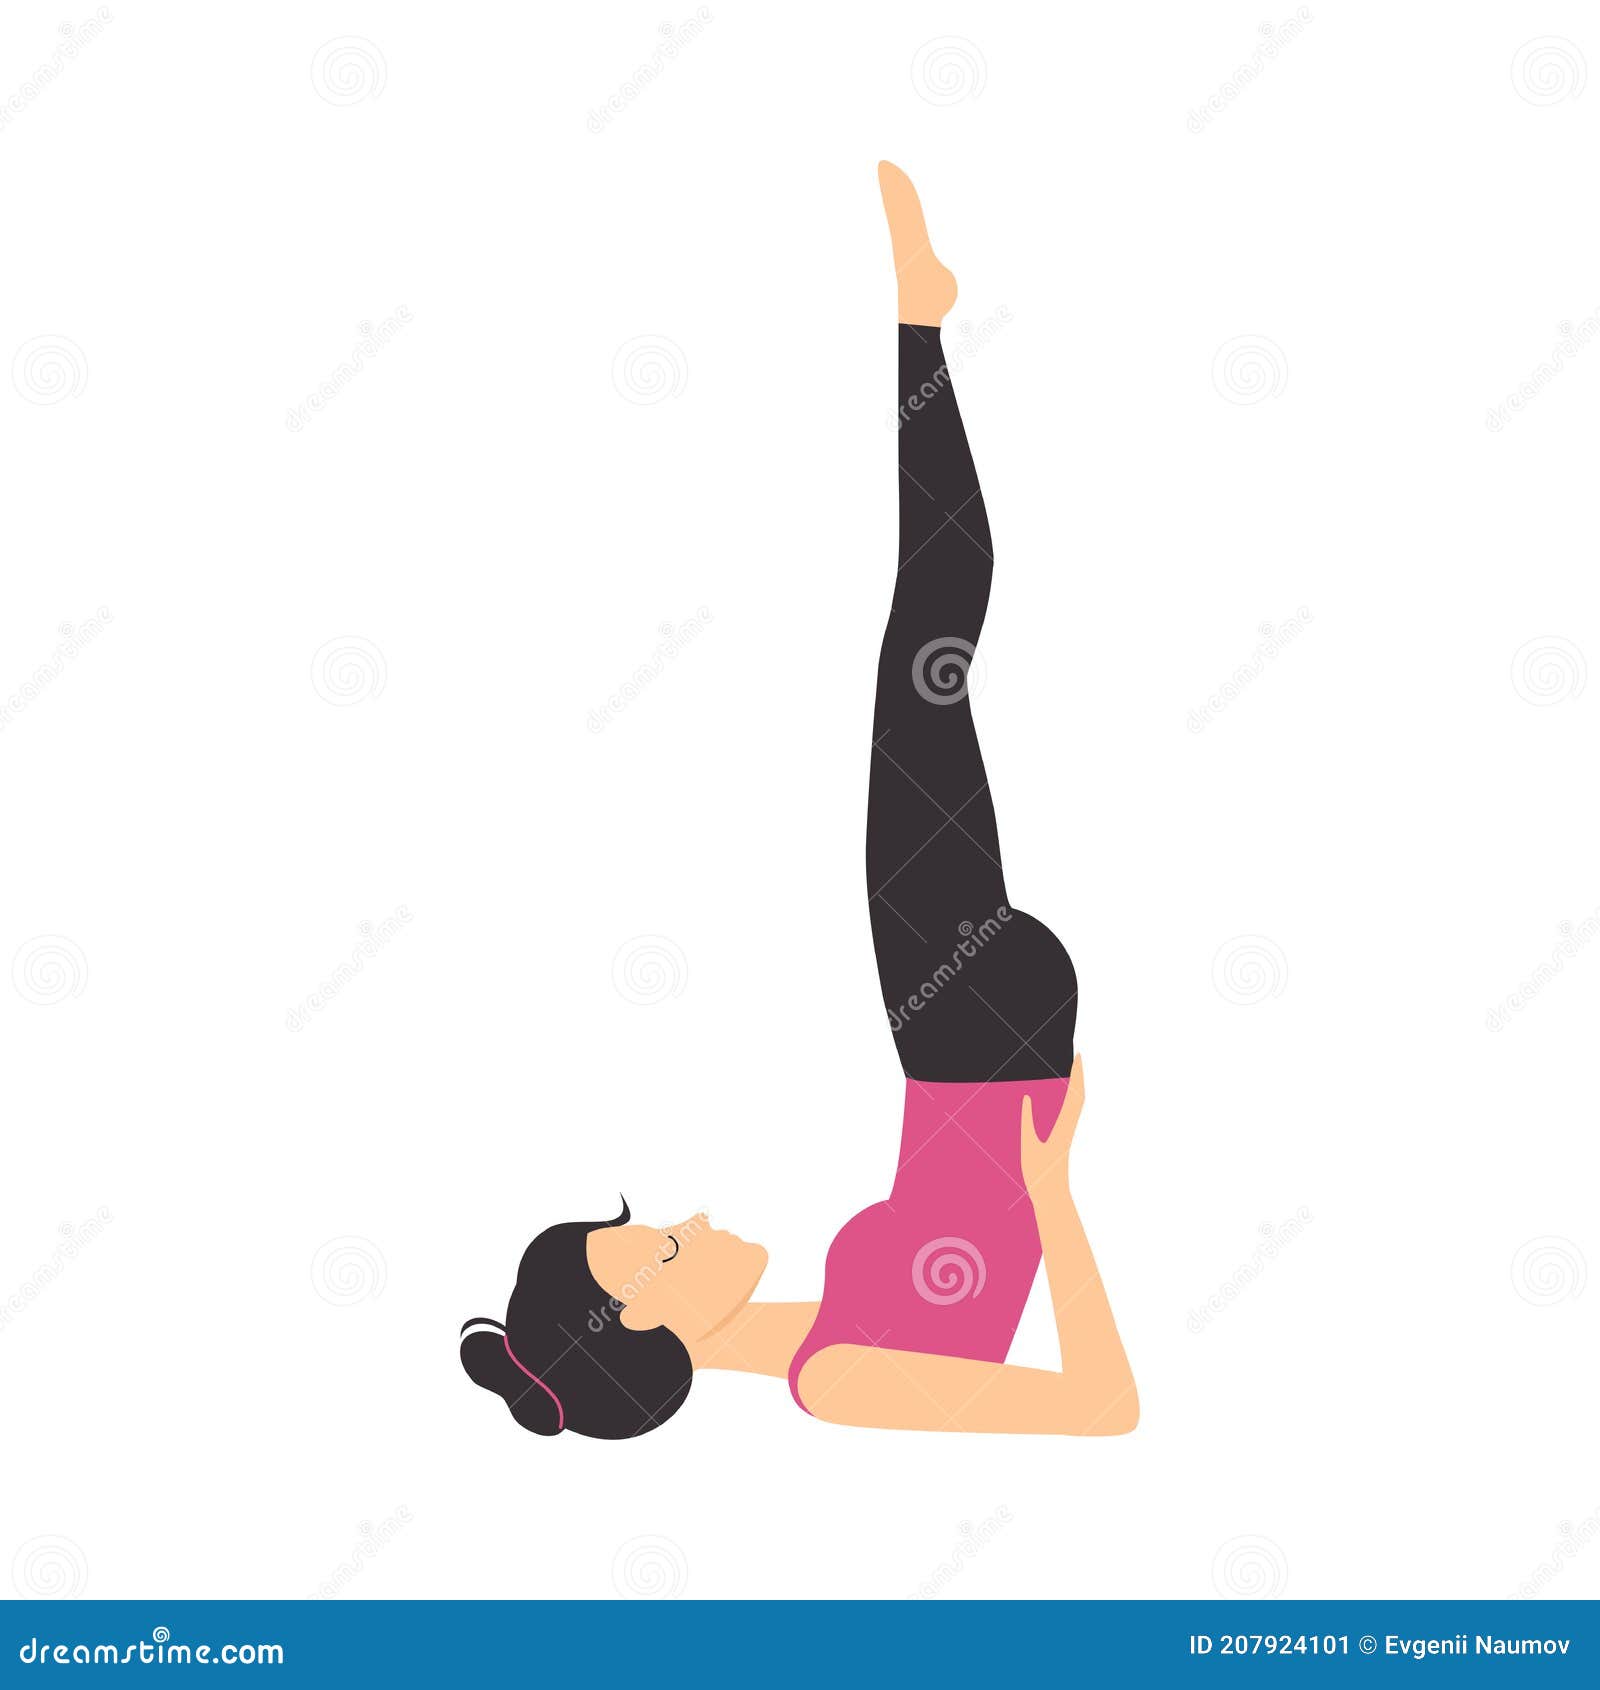 Yoga pose Shoulder stand (Sarvangasana) for beginners | Shoulder stand yoga,  Shoulder stand, Yoga poses